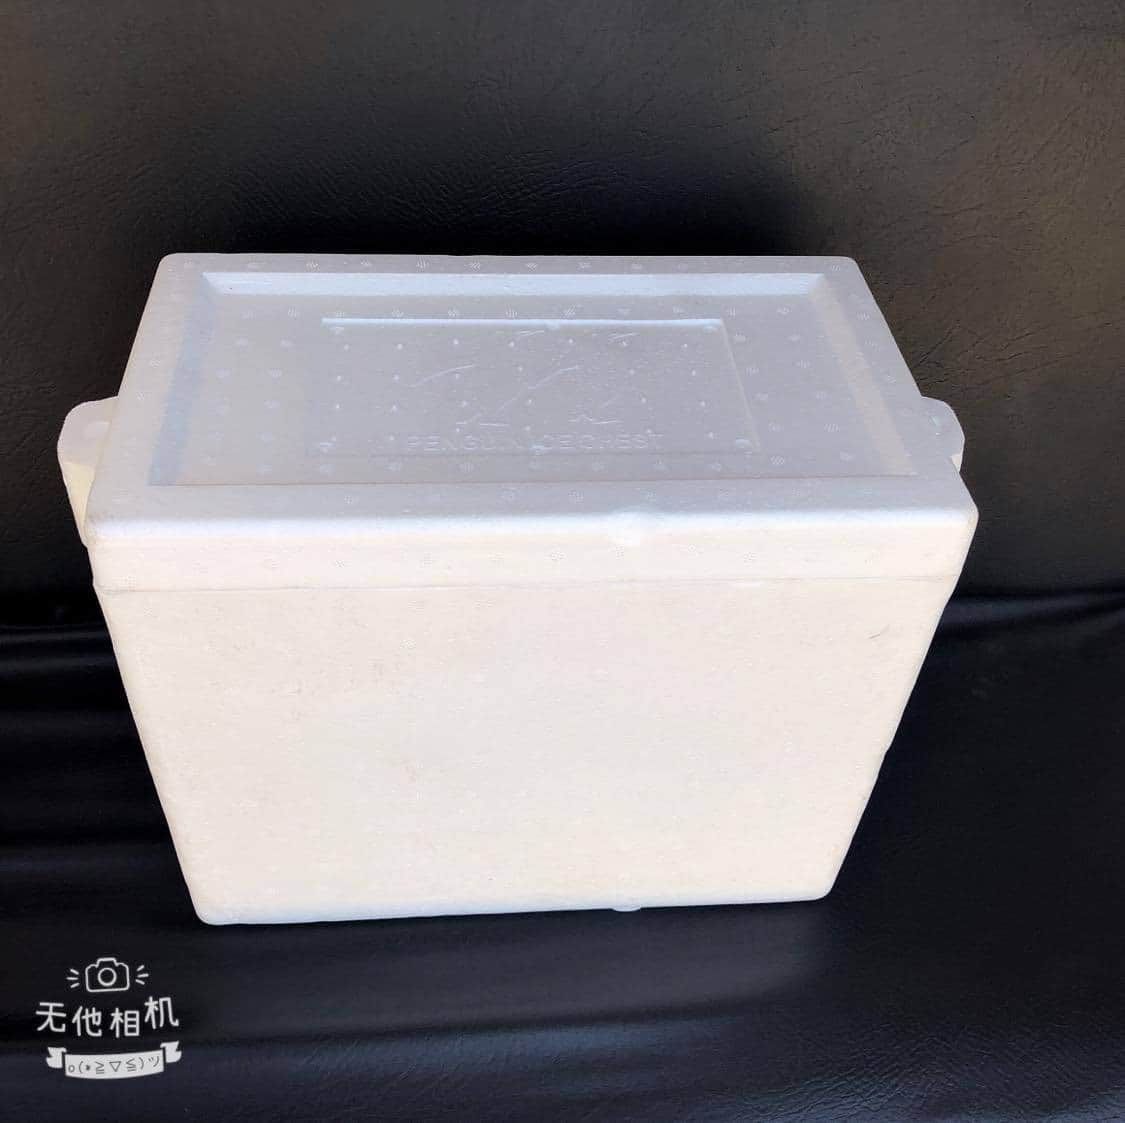 85 Quart Styrofoam Cooler